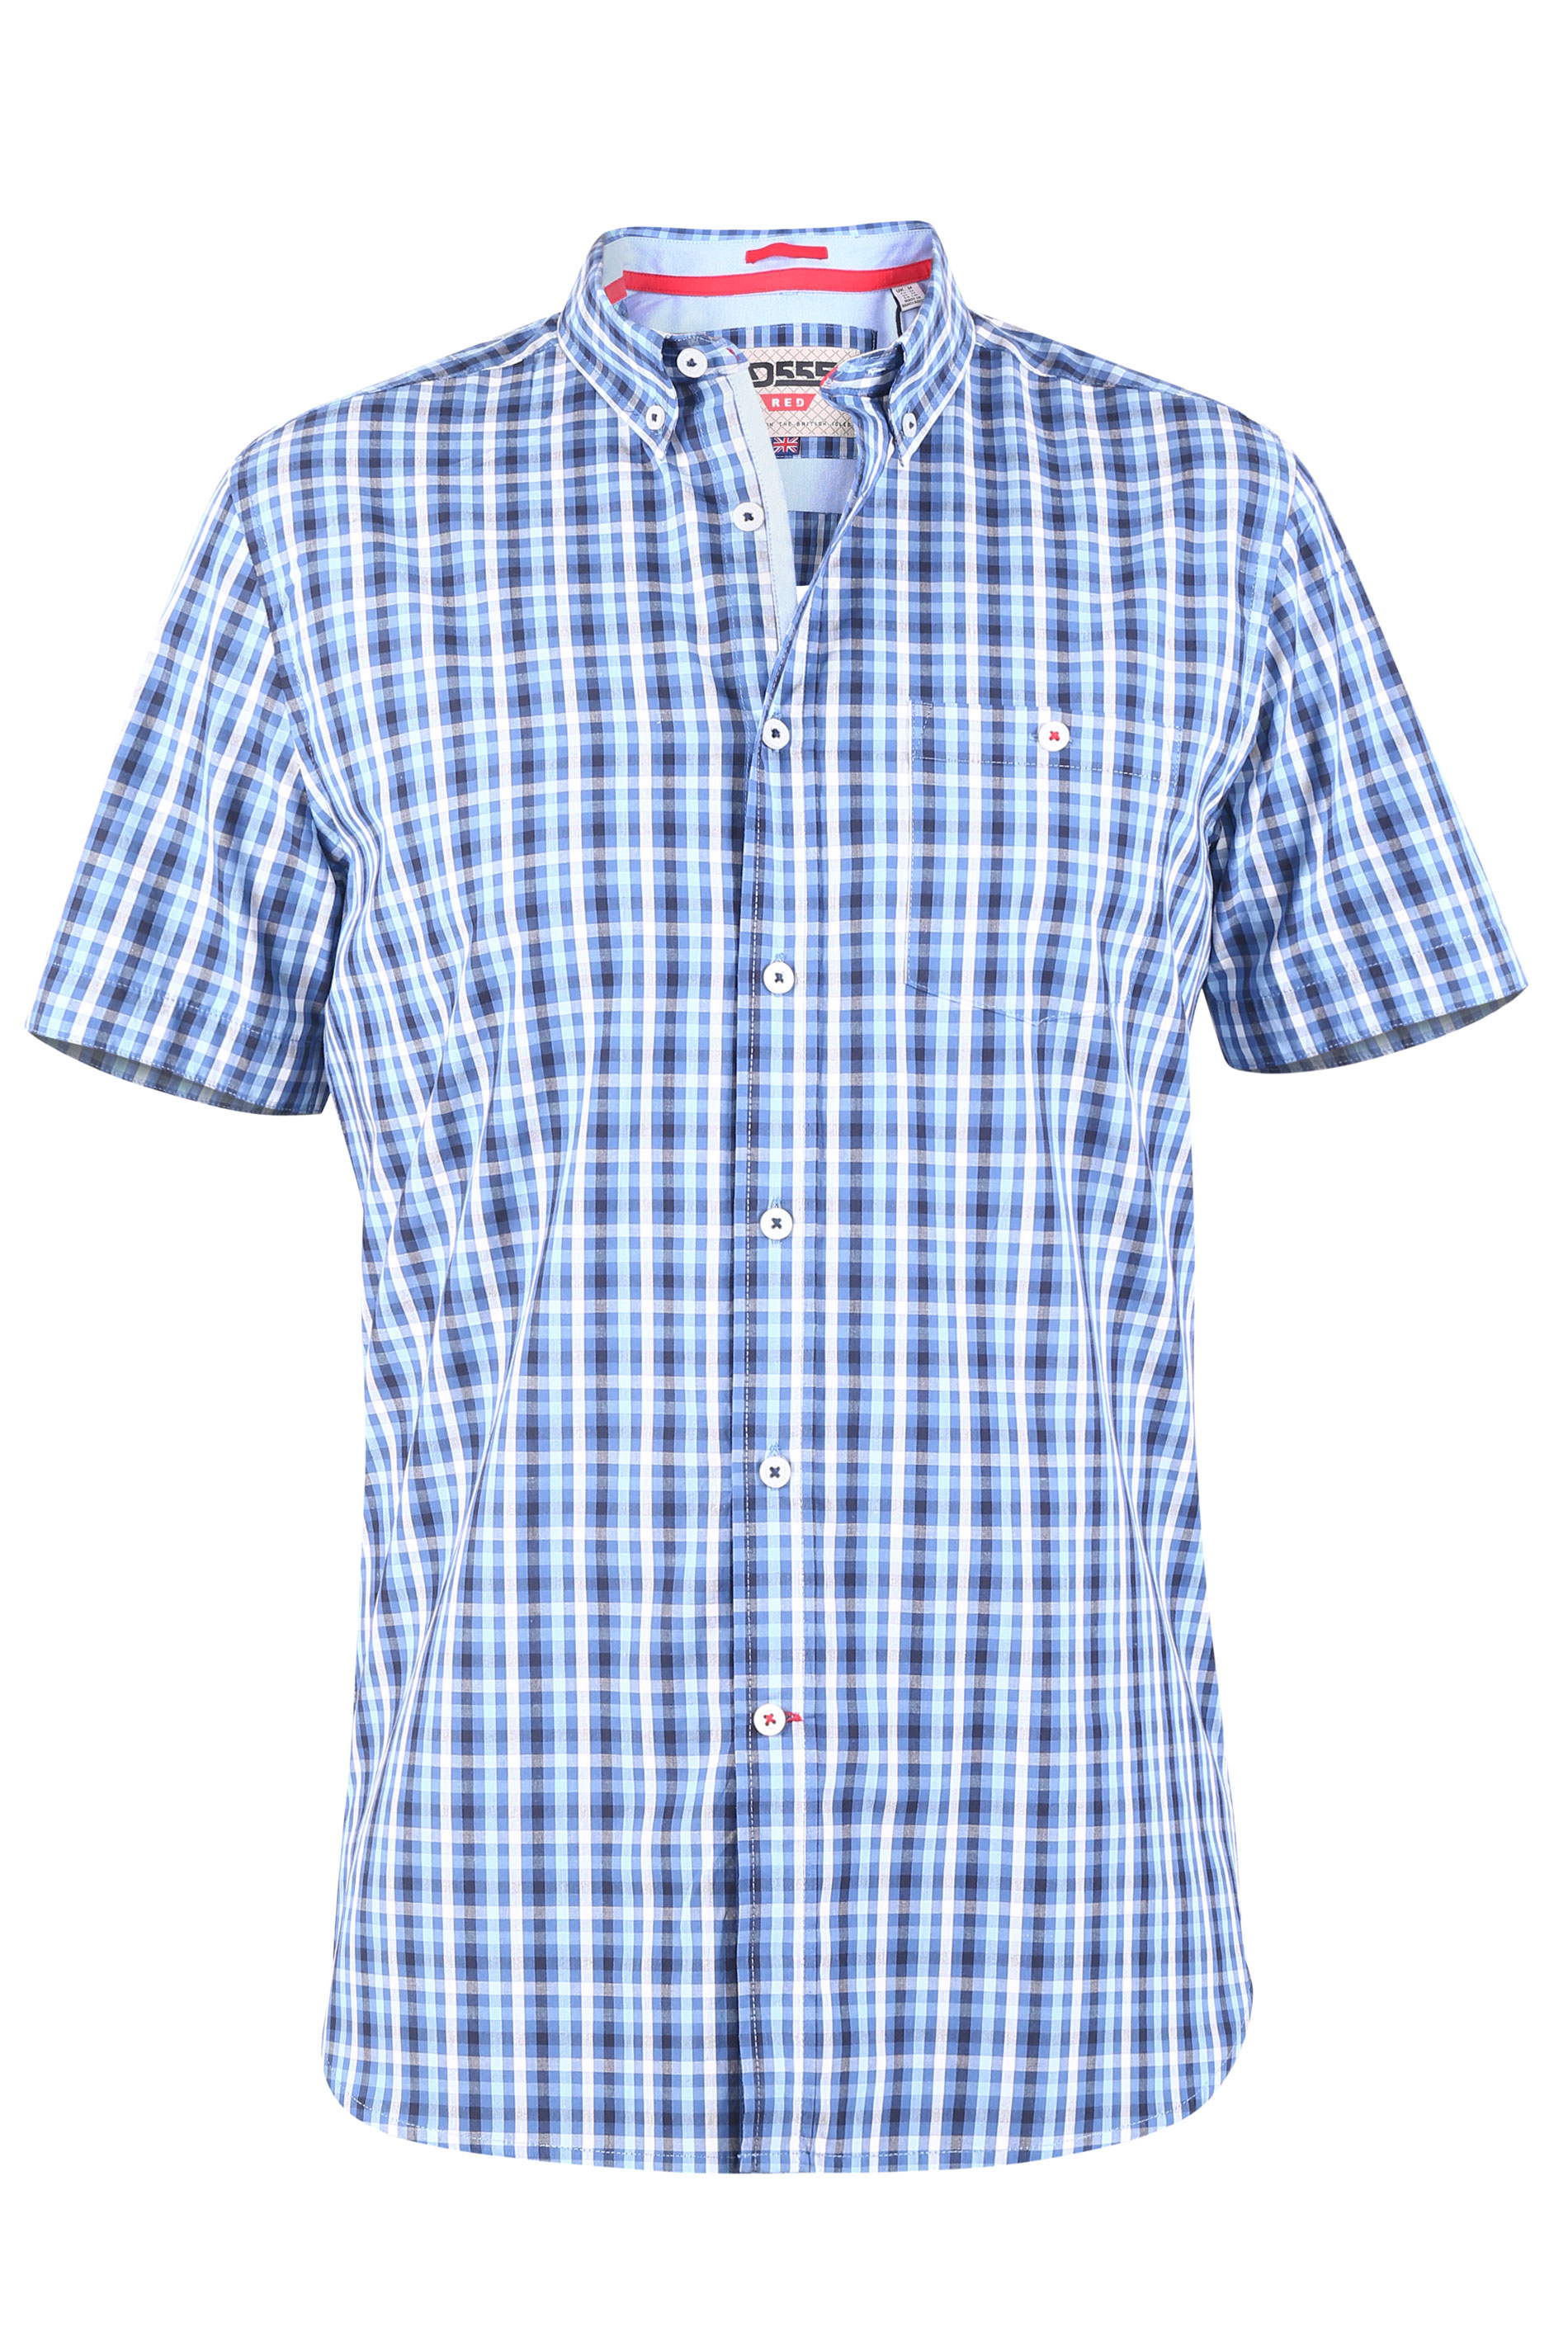 D555 Big & Tall Blue Check Short Sleeve Shirt 1